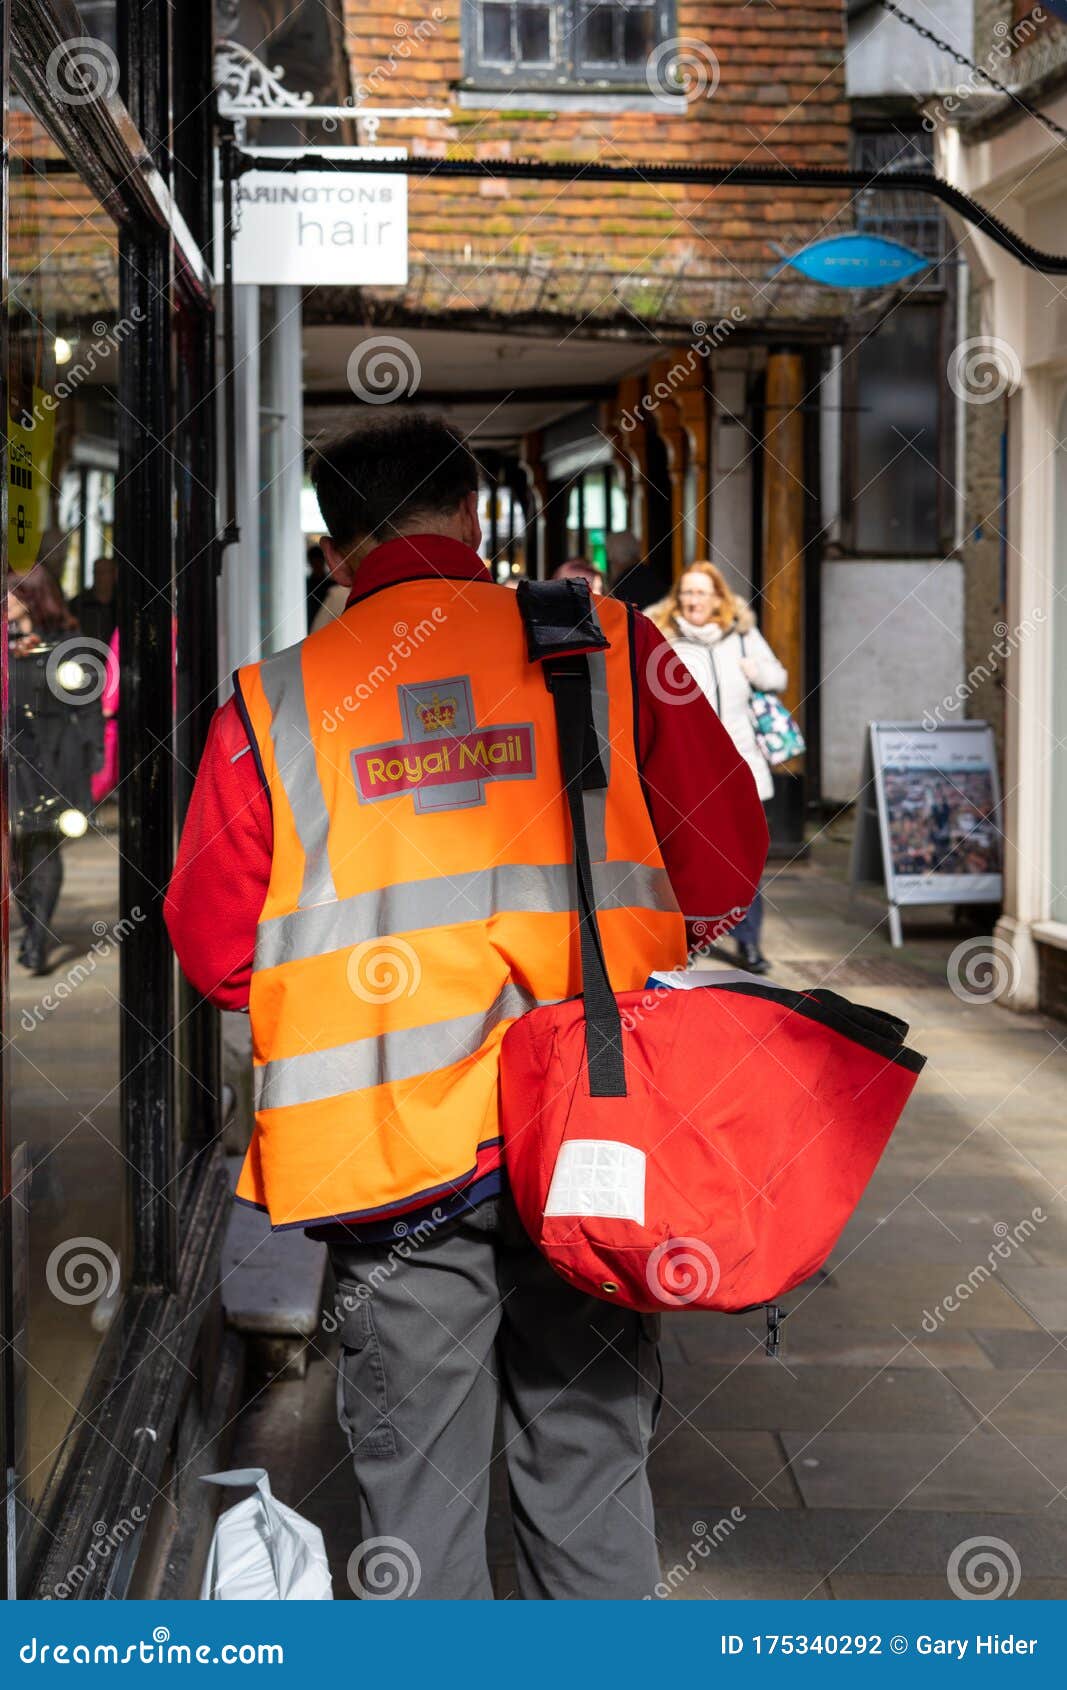 Royal mail postman jobs in swindon